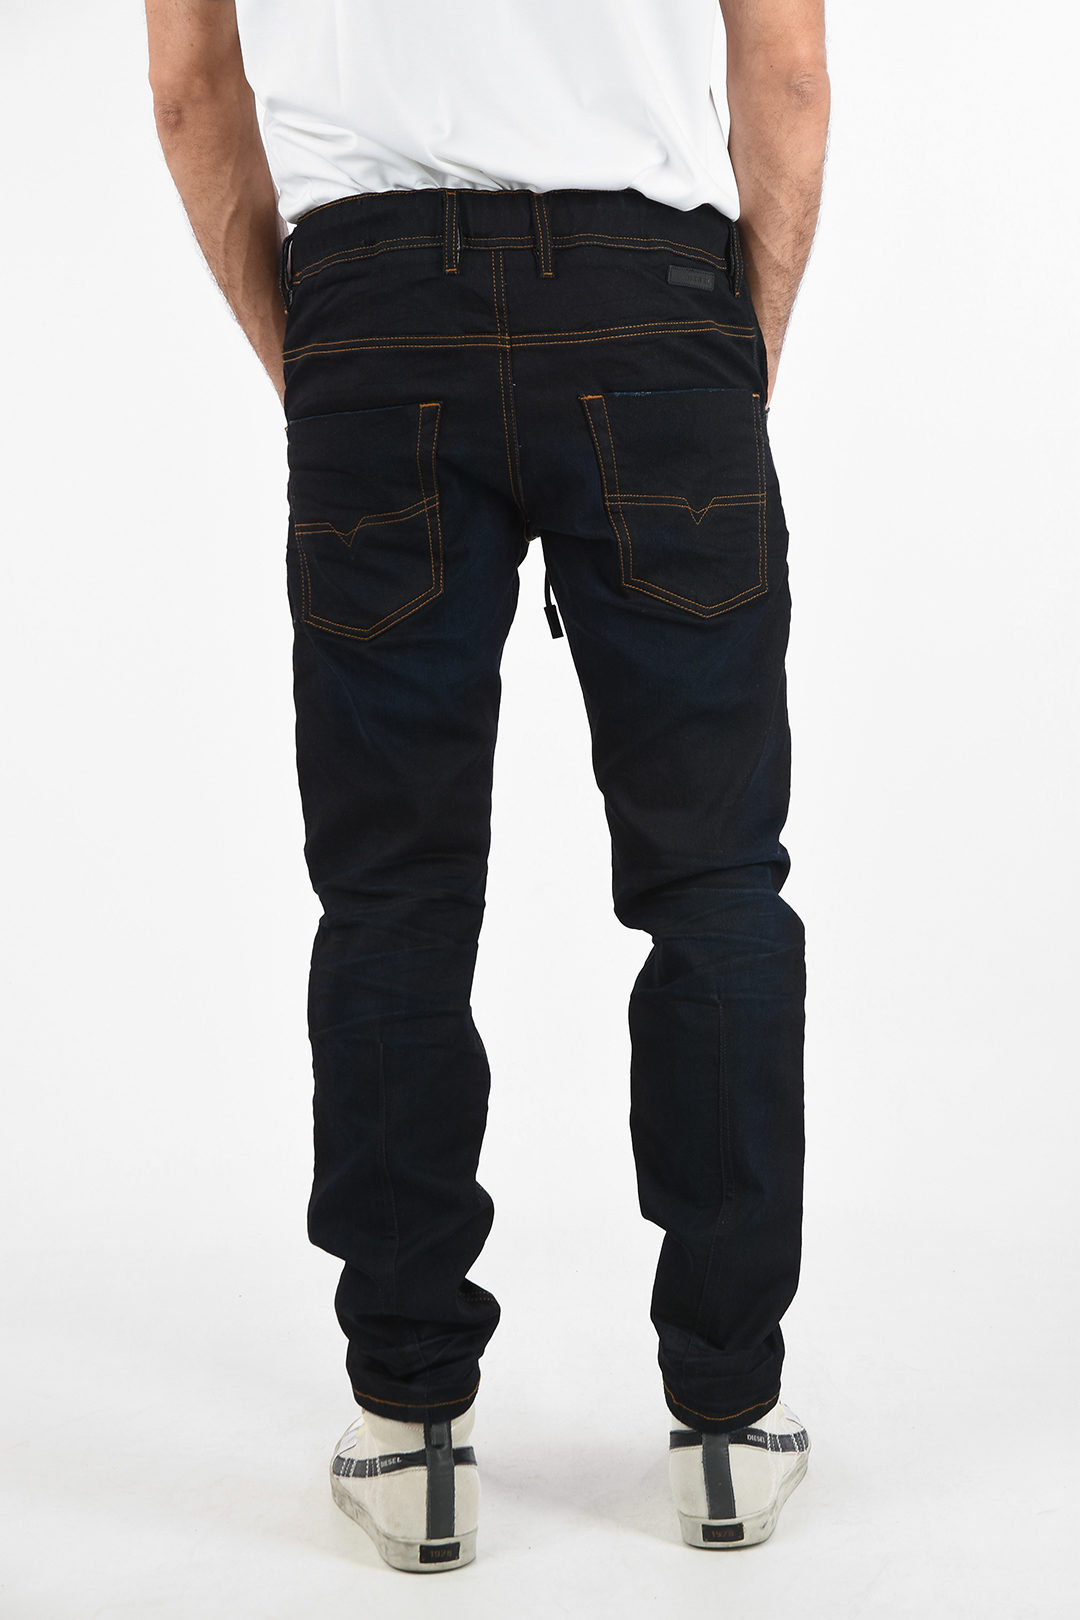 Diesel 17cm Denim Stretch KROOLEY-NE Sweat Jogg jeans men - Glamood Outlet